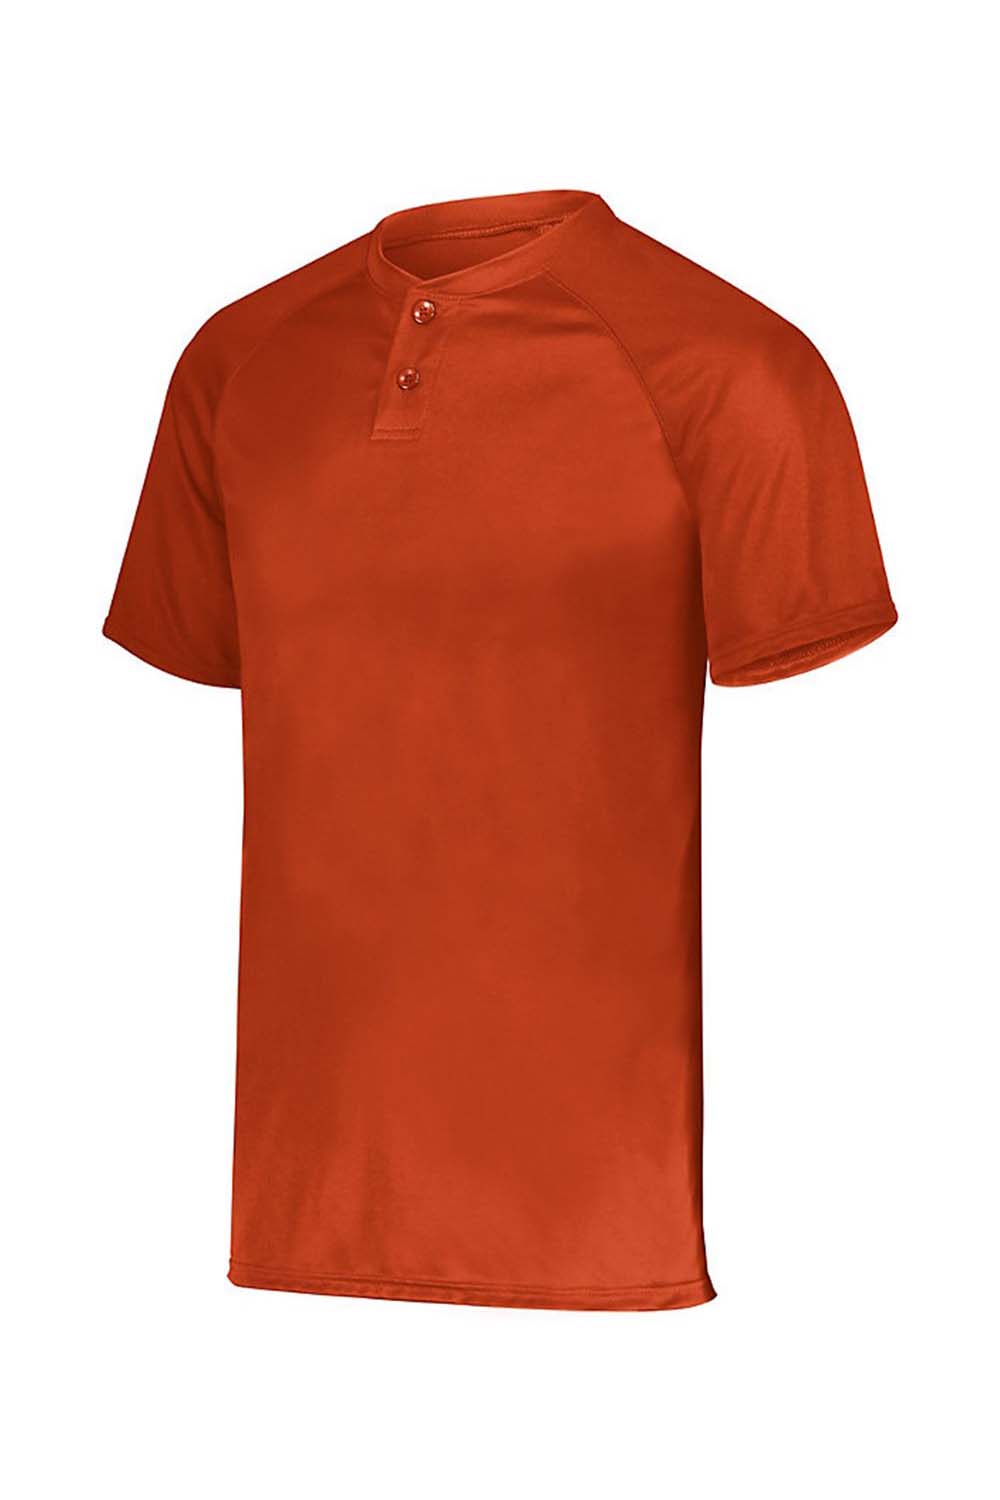 Augusta Sportswear AG1565 Mens Attain 2 Moisture Wicking Button Short Sleeve Baseball Jersey Orange Model Flat Front